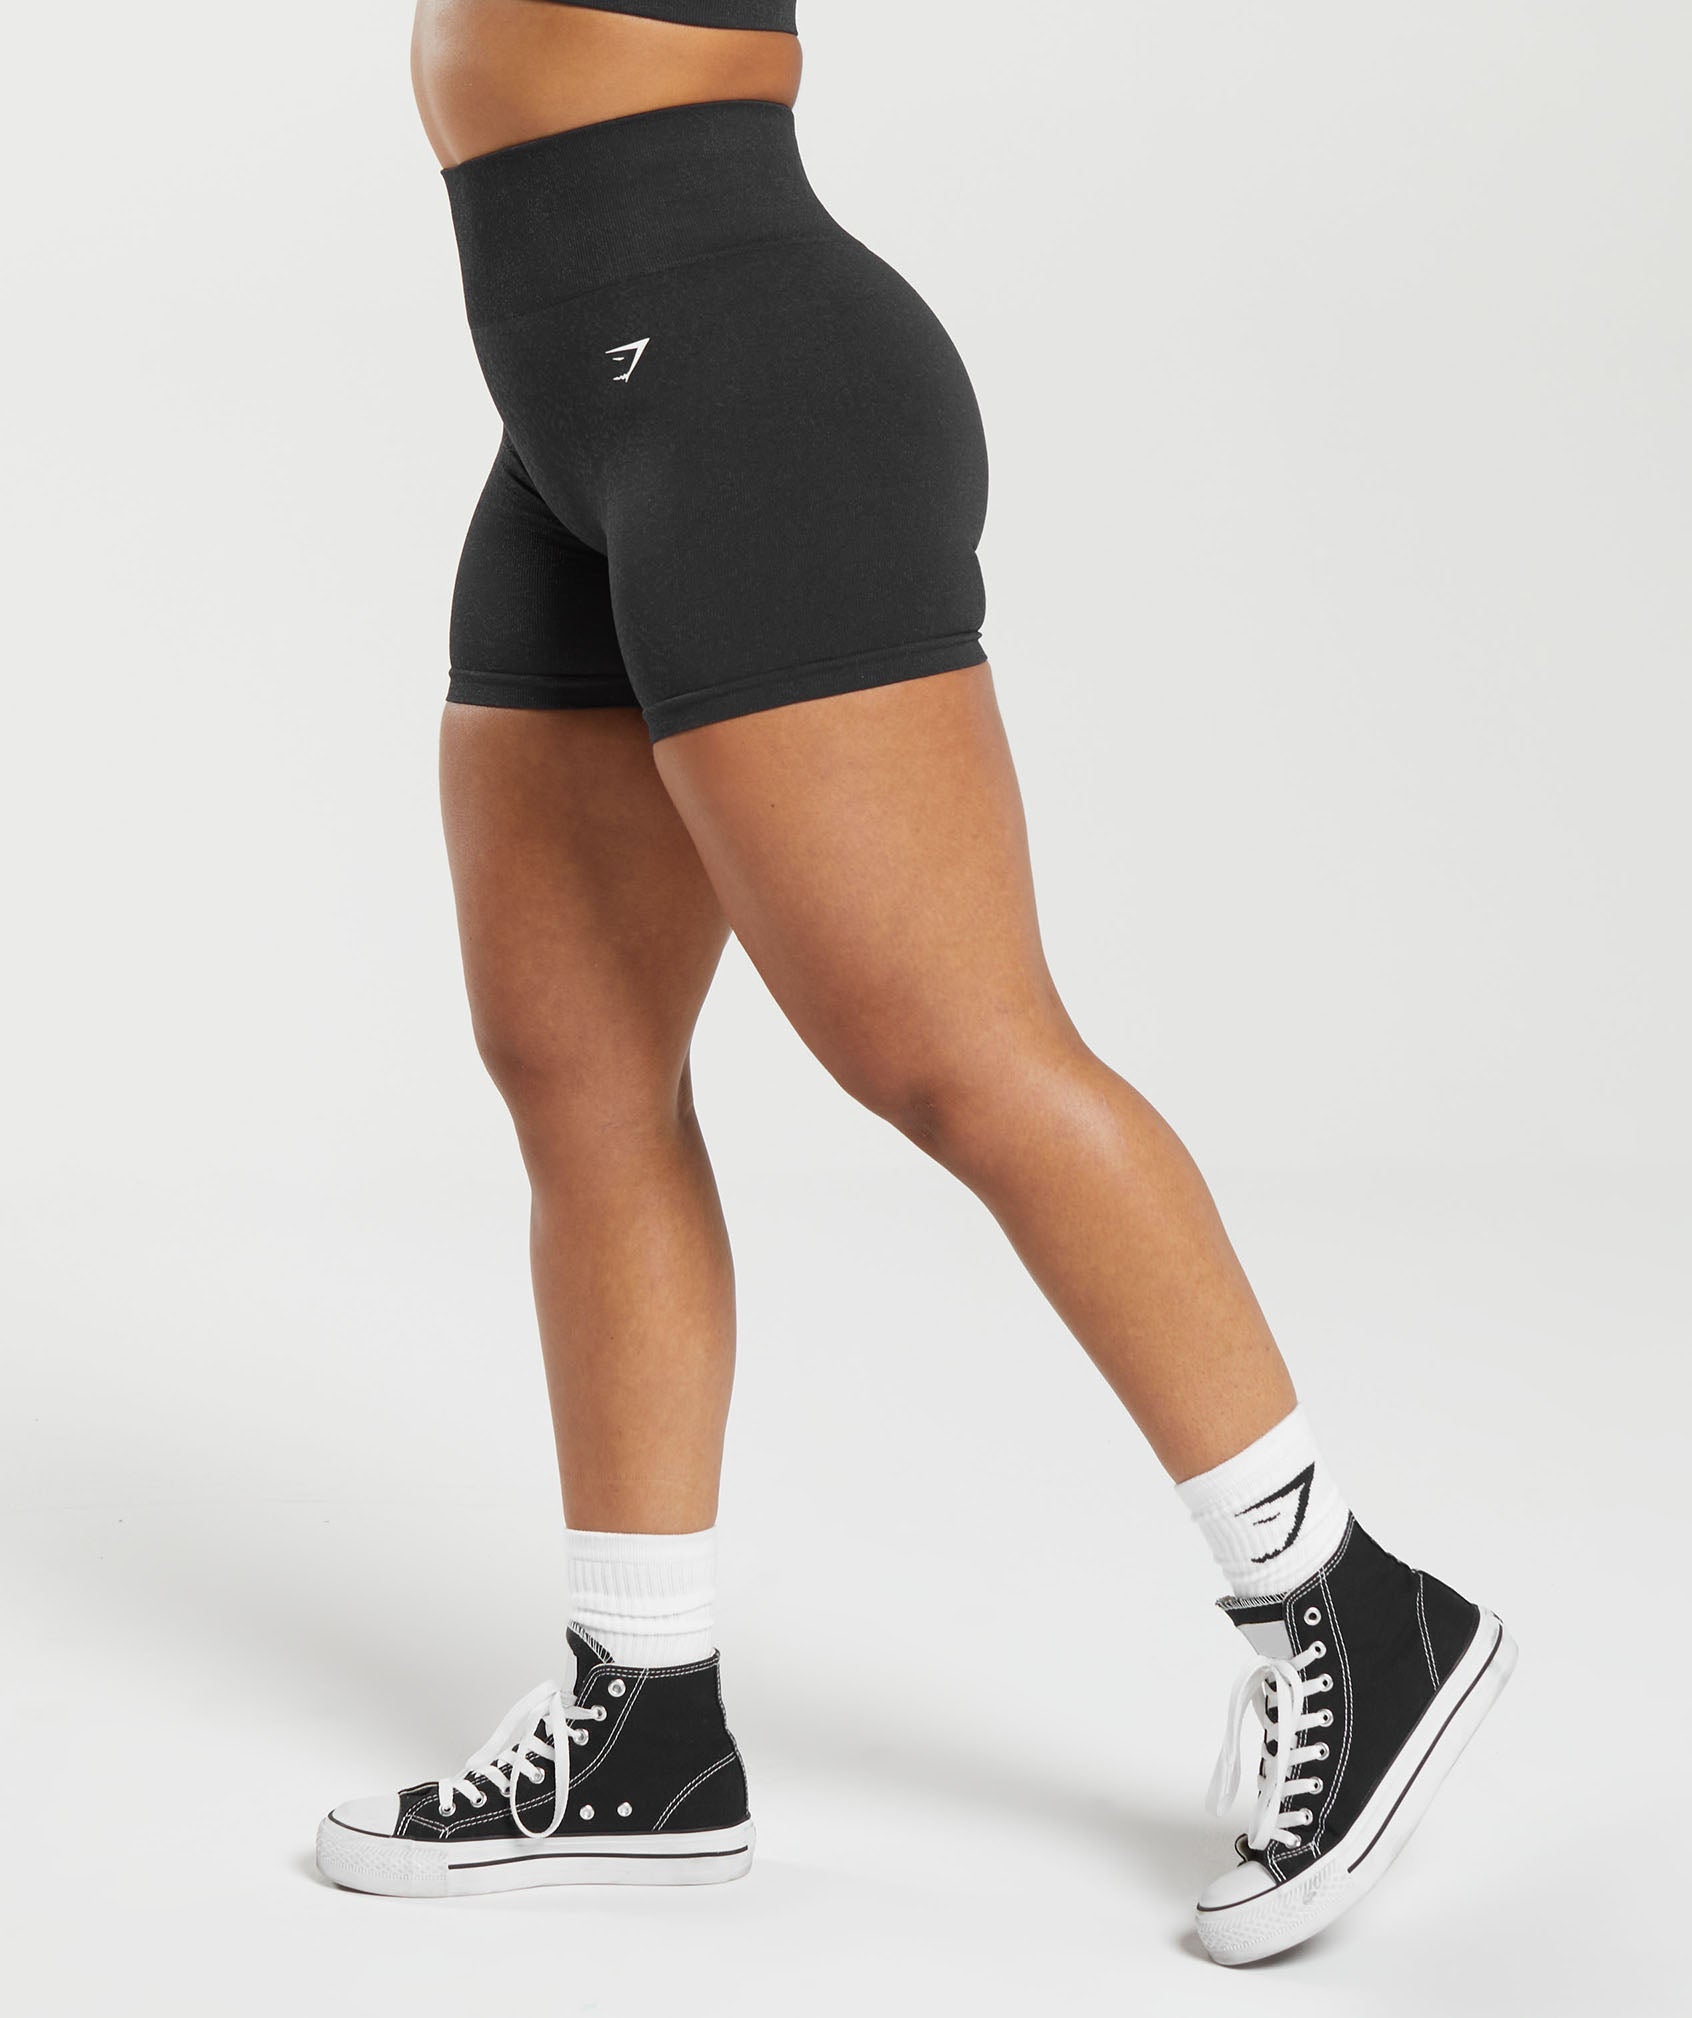 Adapt Fleck Seamless Shorts in Black/Smokey Grey - view 3